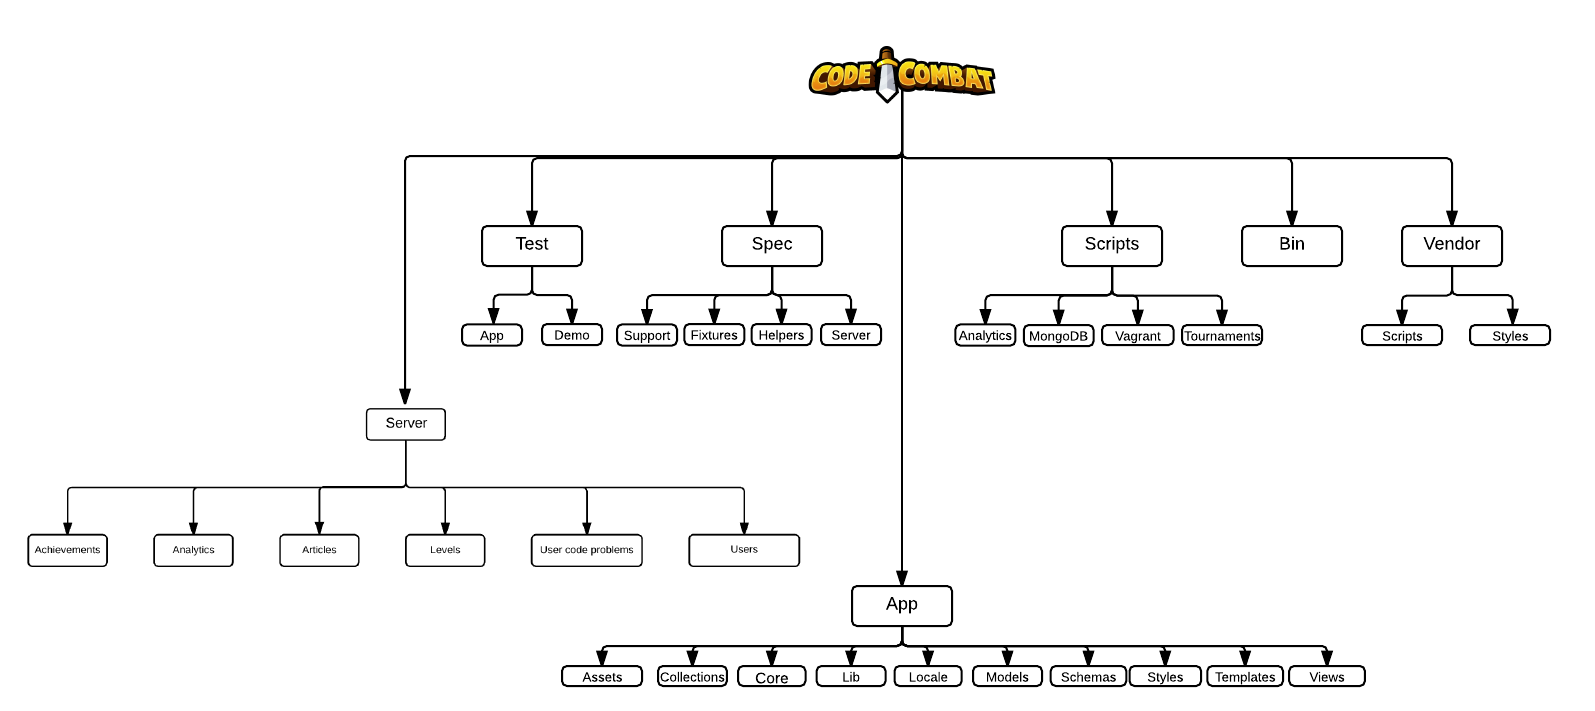 Codeline Organization model